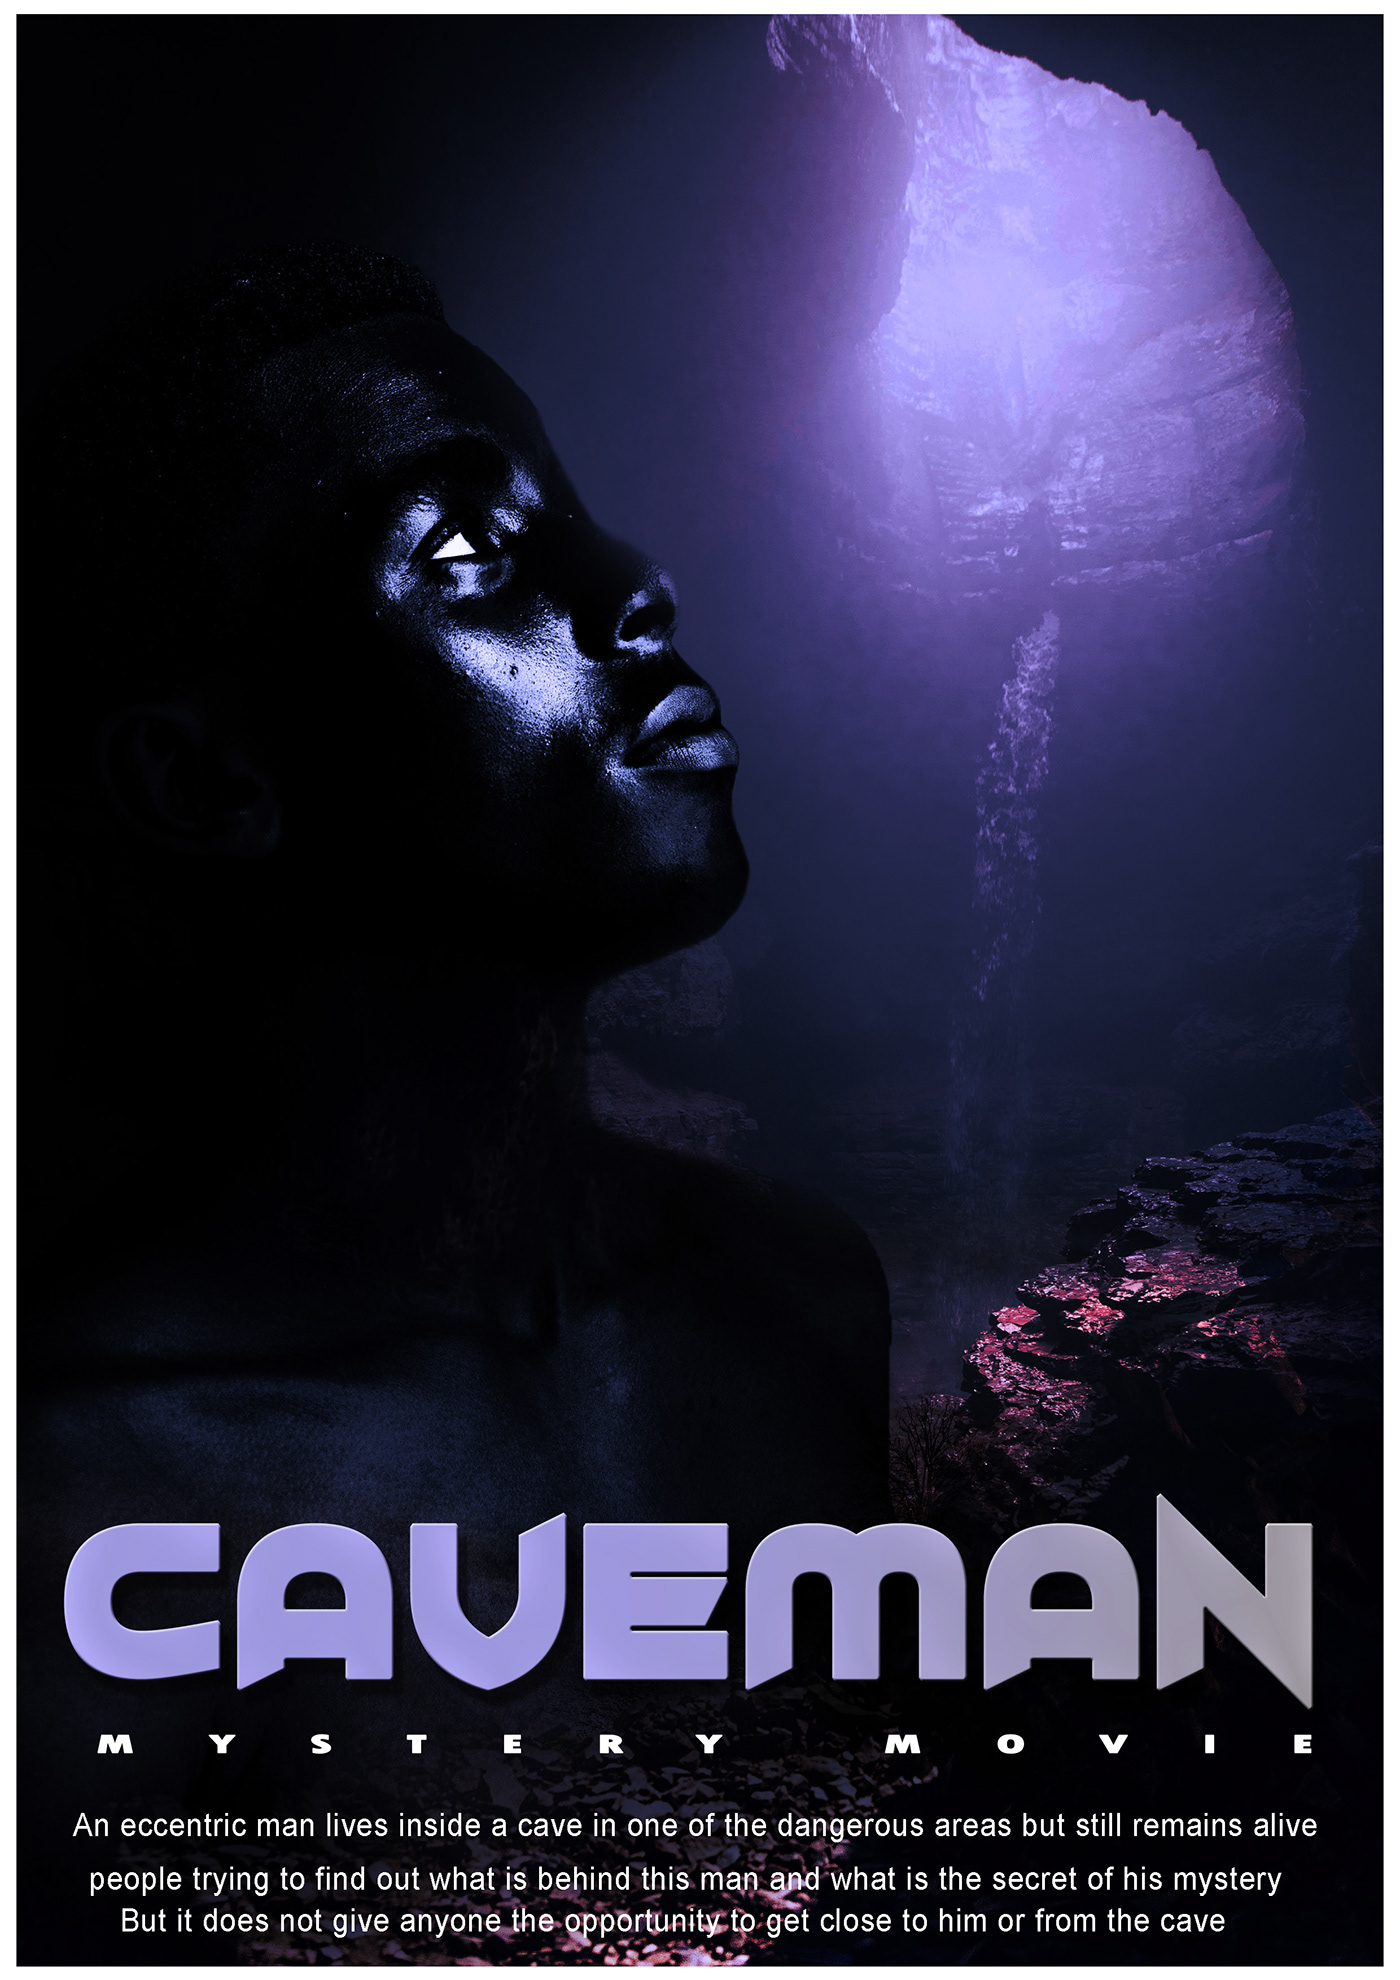 caveman design imaginary movie photoshop poster